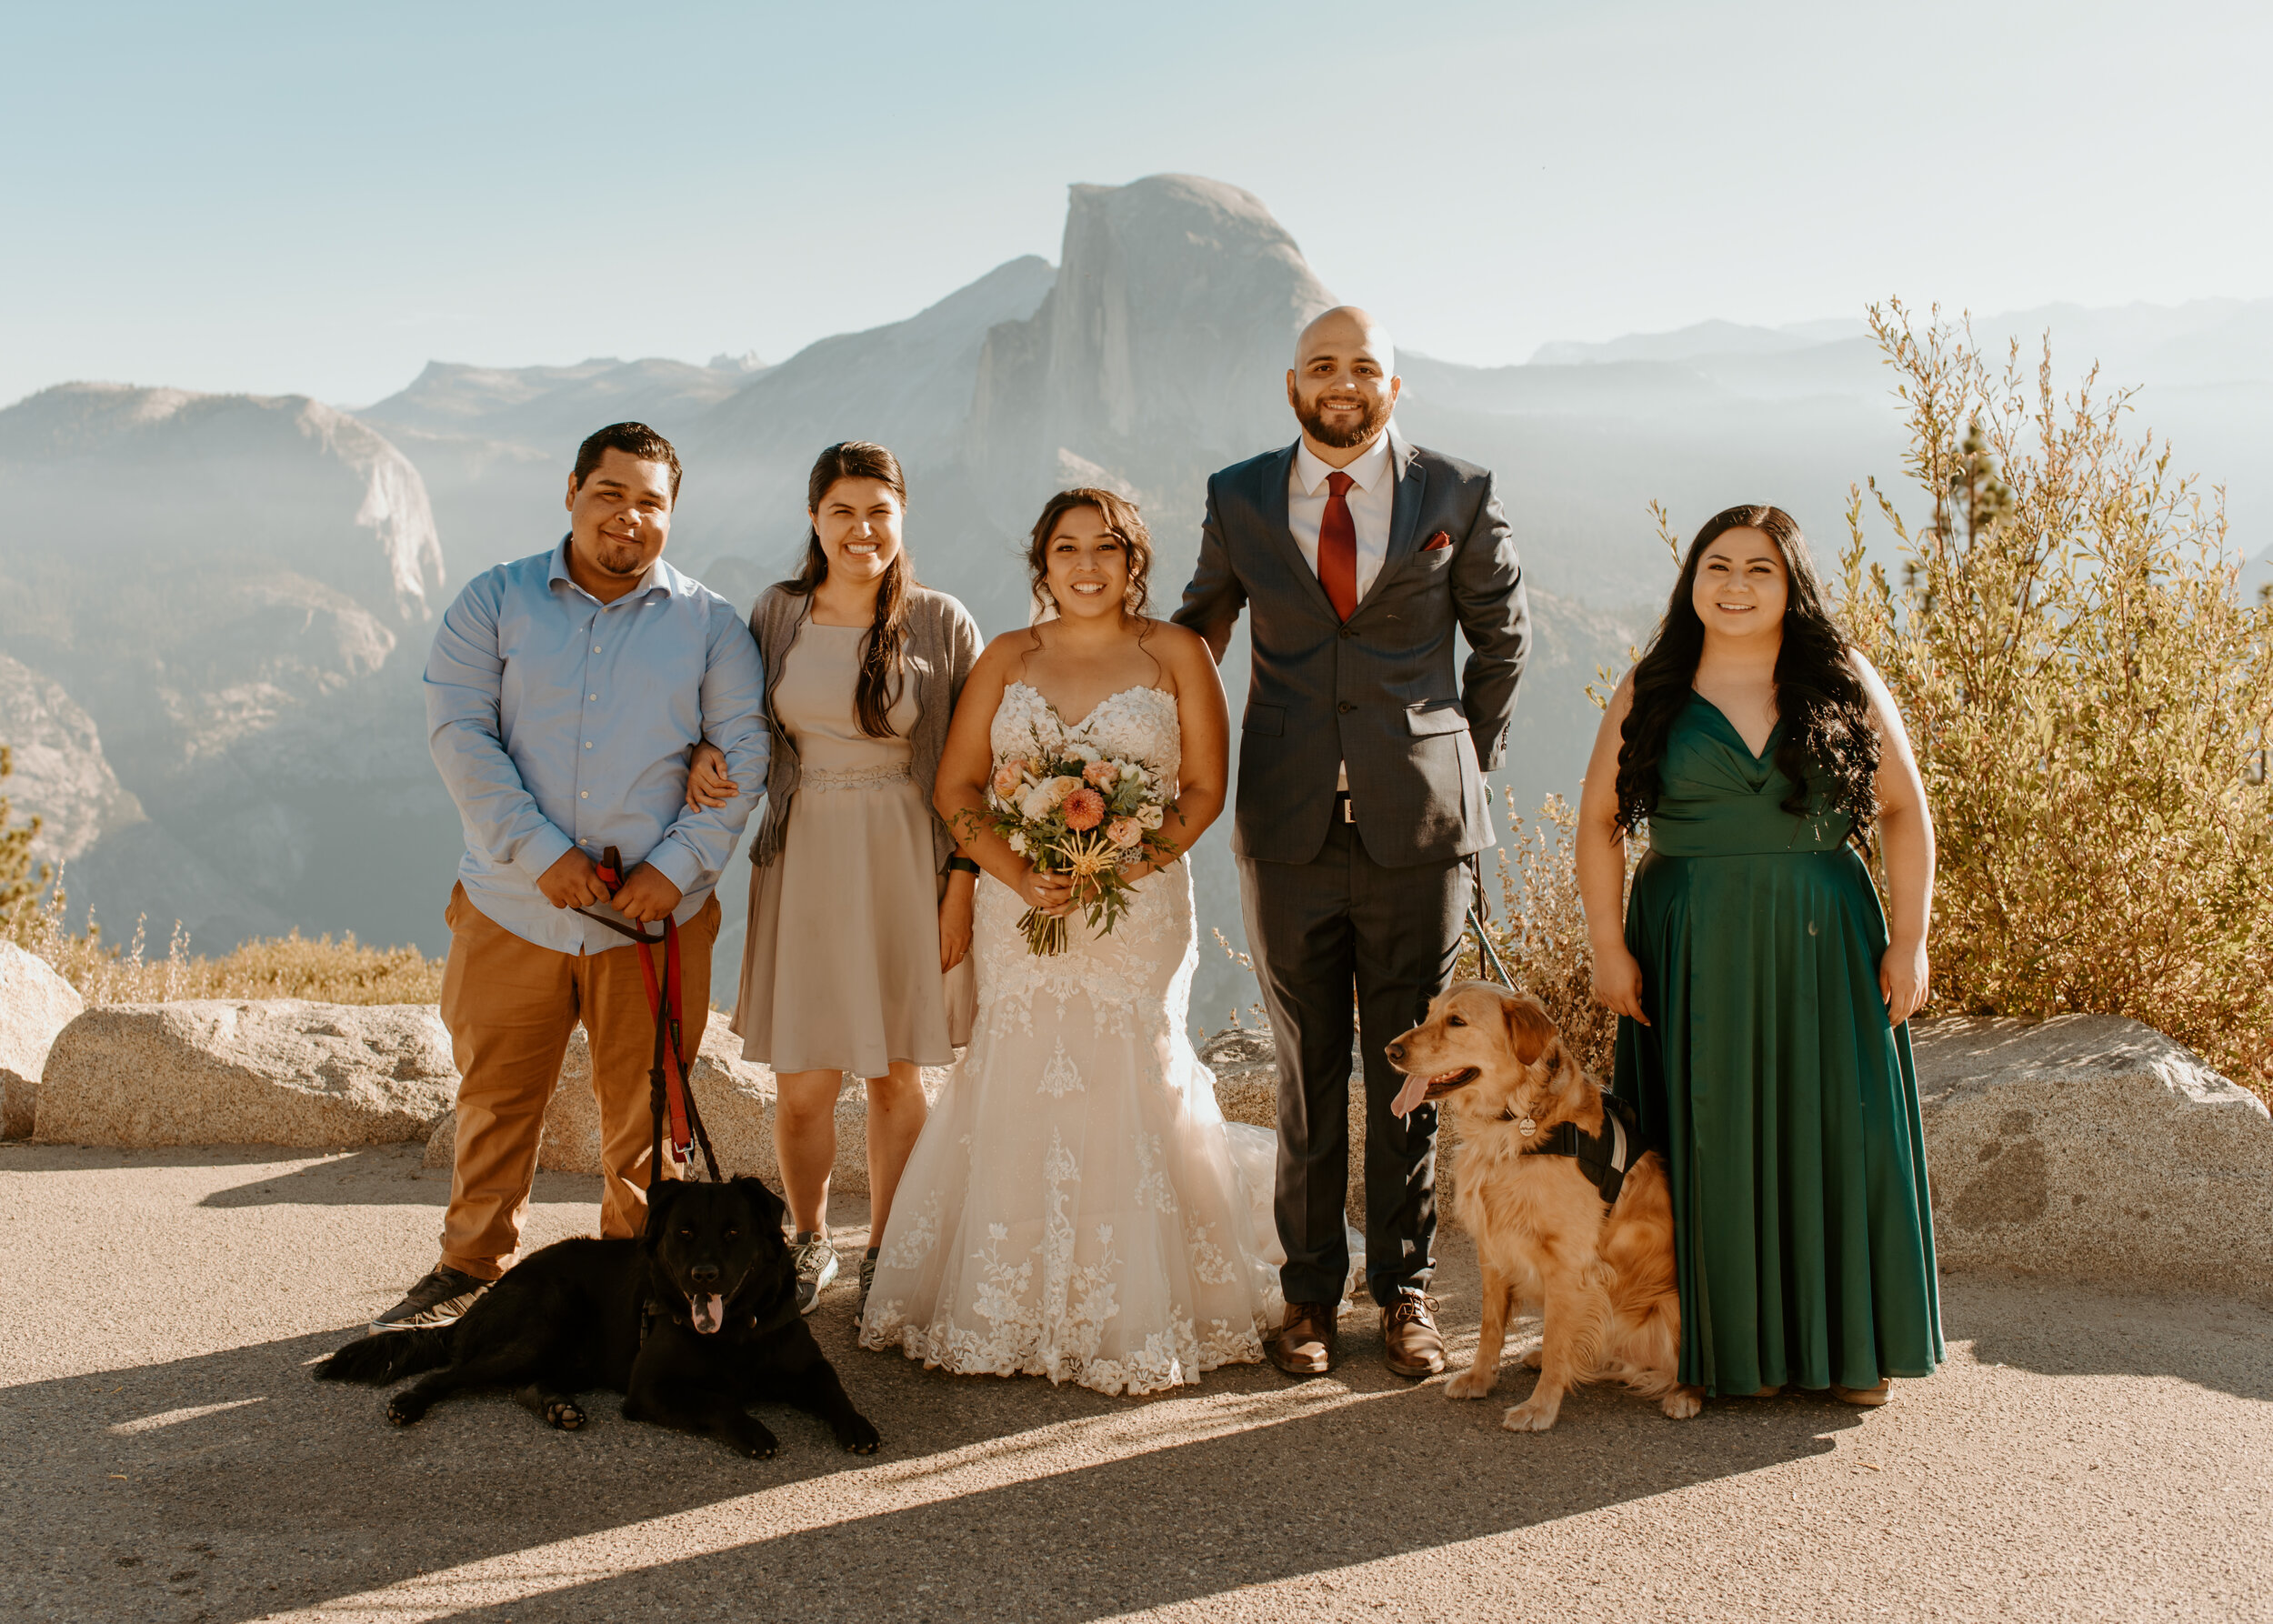 Glacier Point Elopement | Yosemite National Park Elopement and Wedding Photographer | Sunrise adventure elopement | California Elopement Photographer